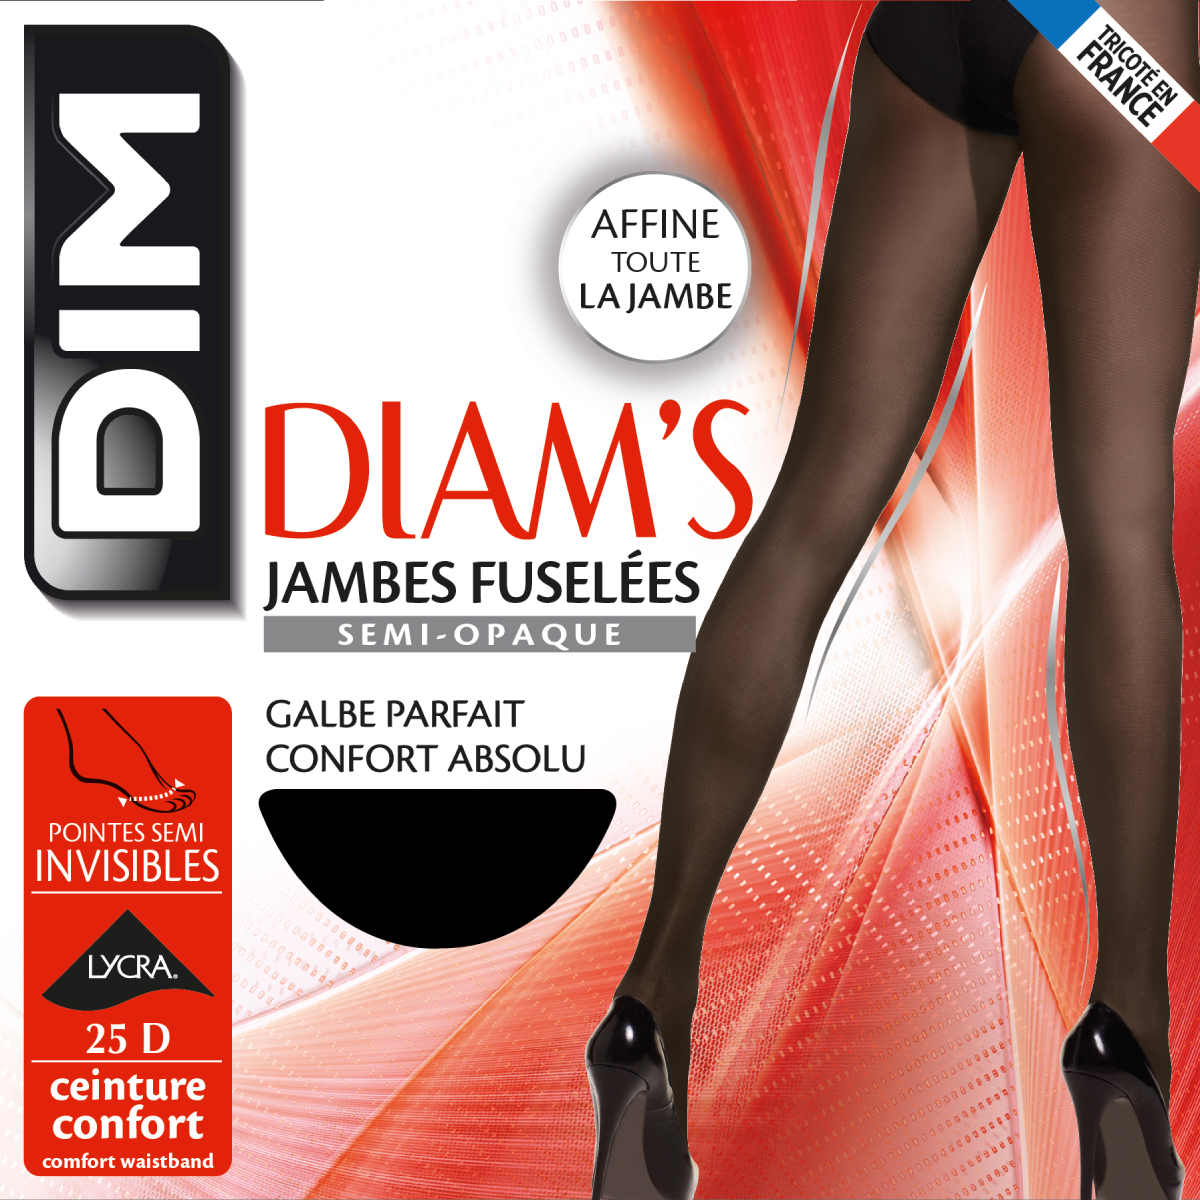 Black Diam’s Jambes Fuselées 70 blackout leg shaper tights